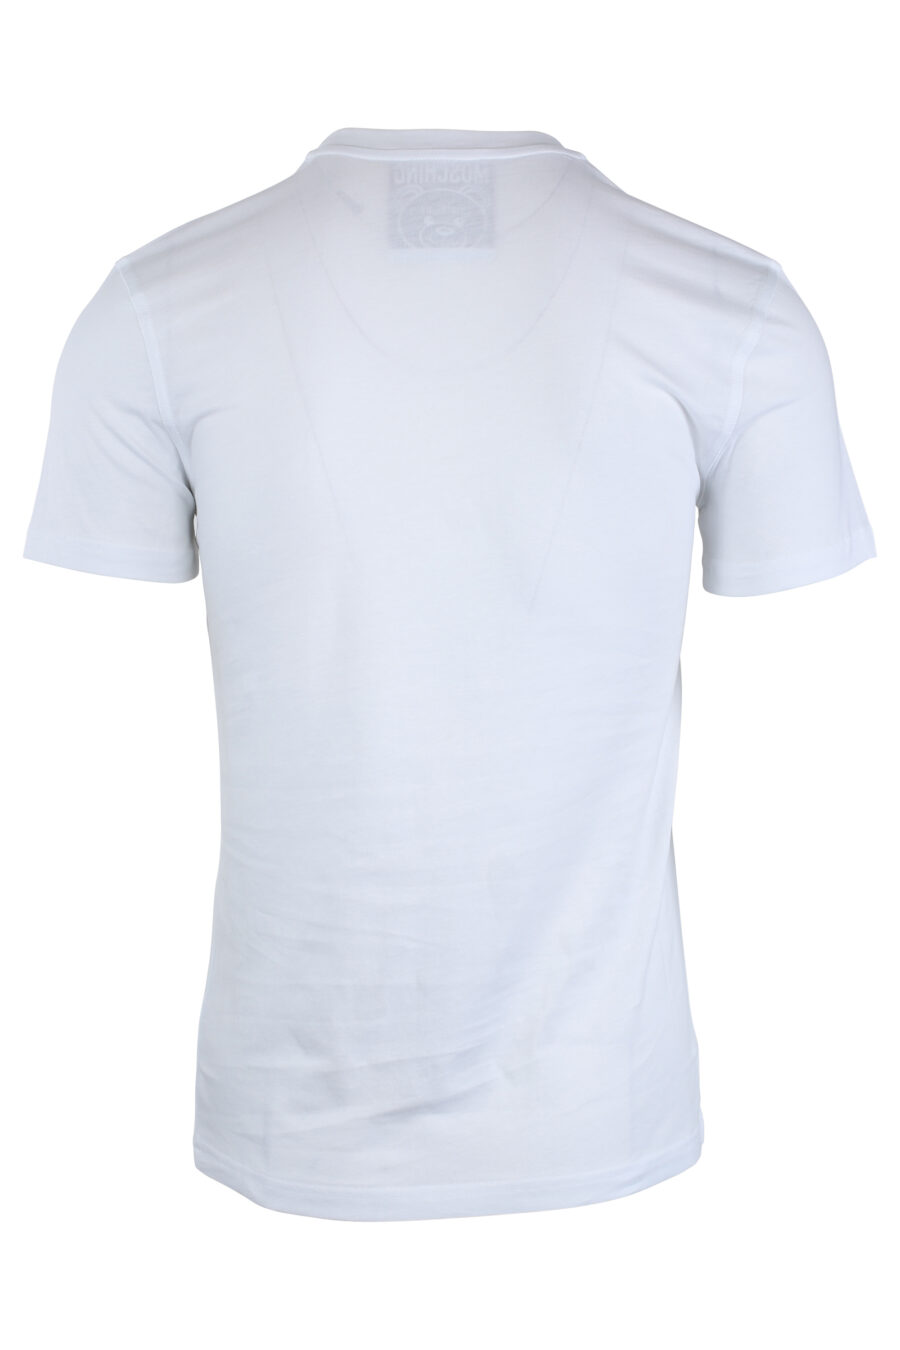 White T-shirt with monochrome bear maxilogo - IMG 1654